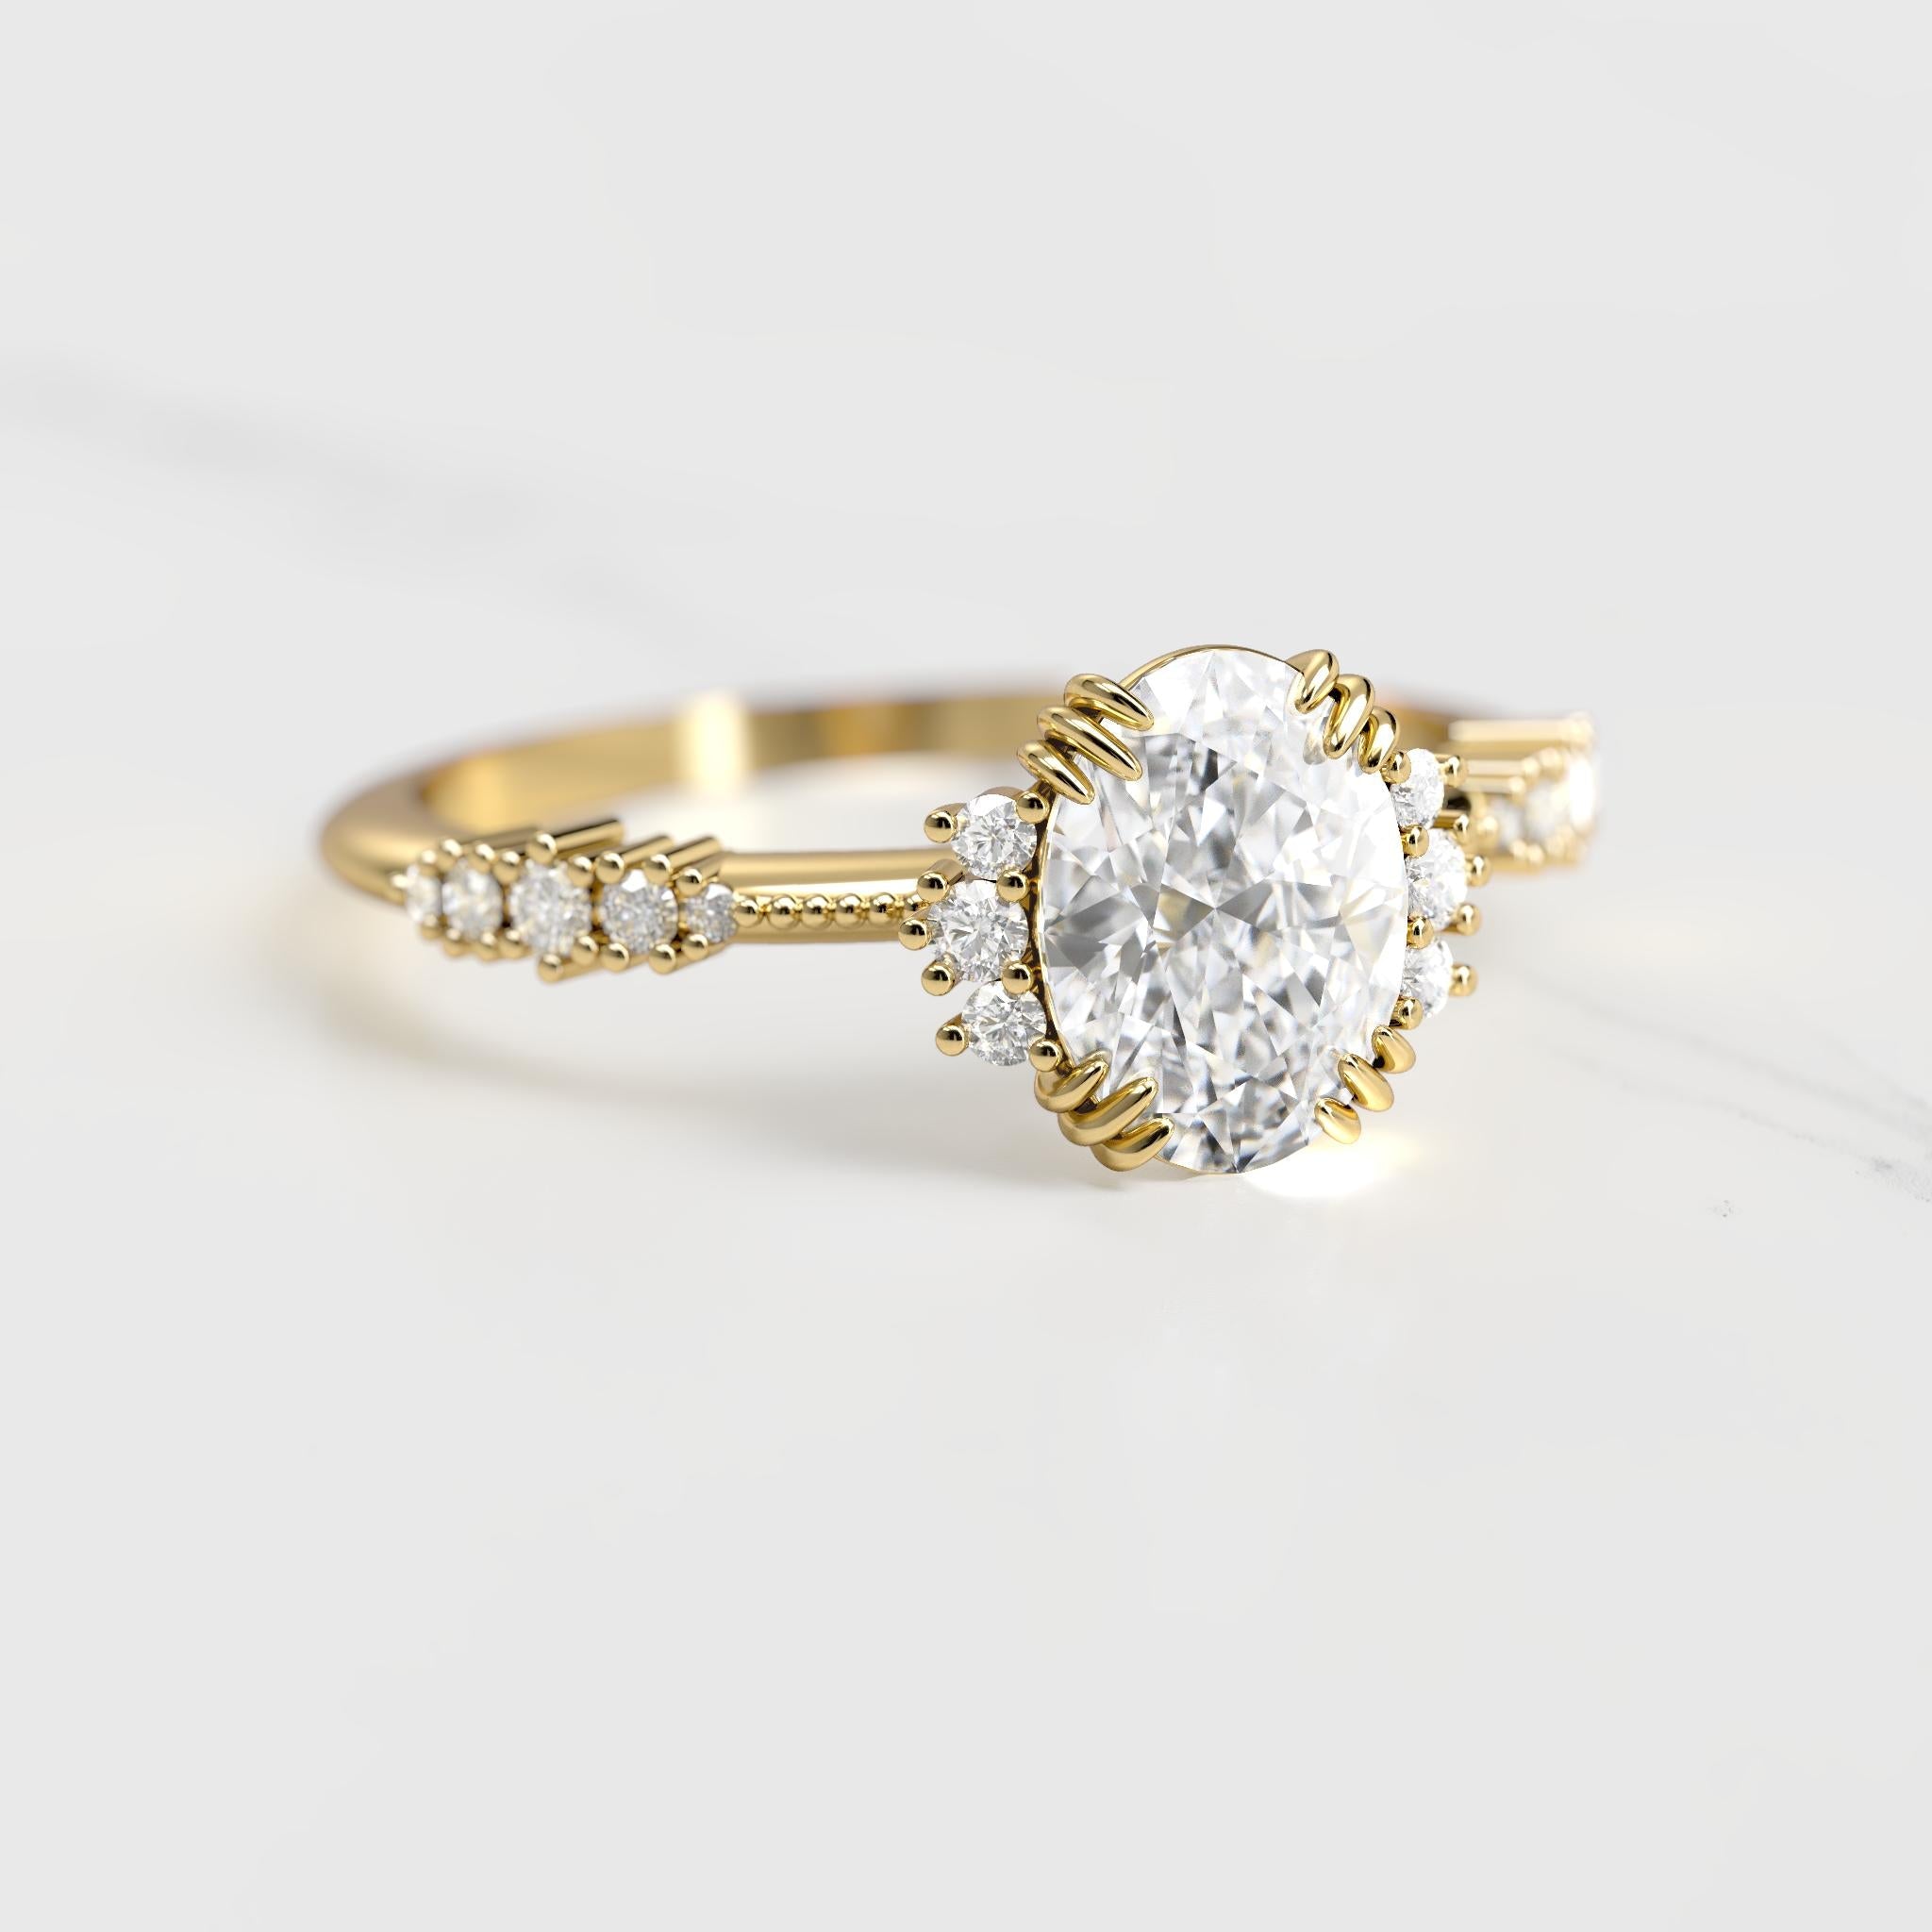 OVAL CLUSTER DIAMOND RING - 18k rose gold / 1.25ct / lab diamond